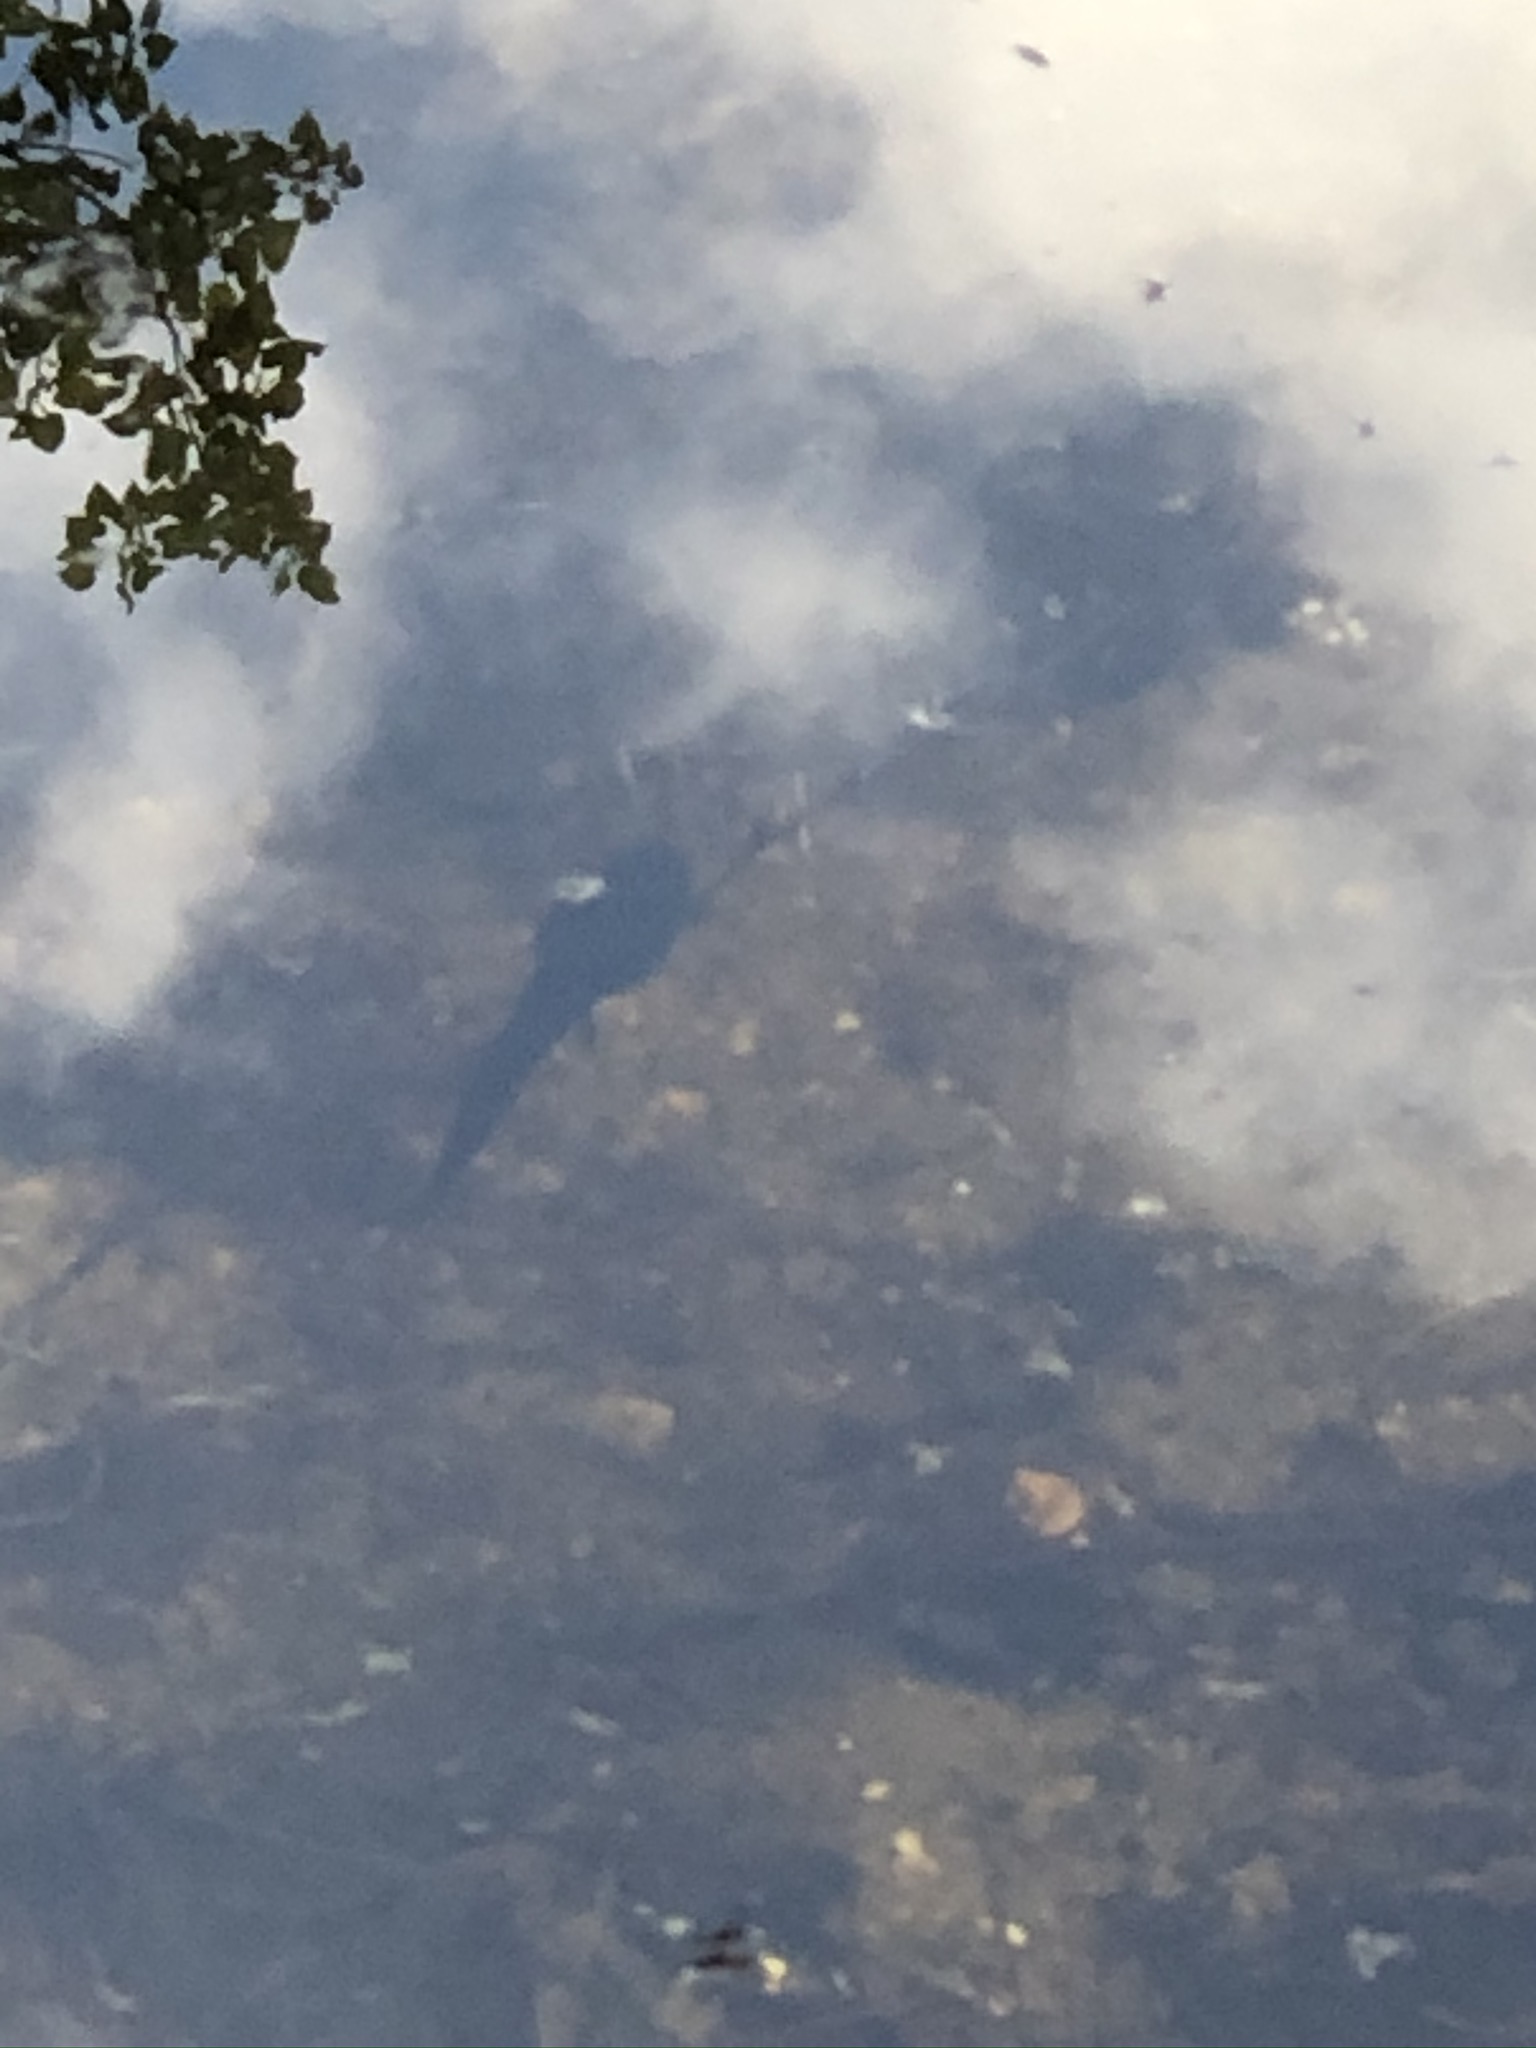 tadpole swimming away